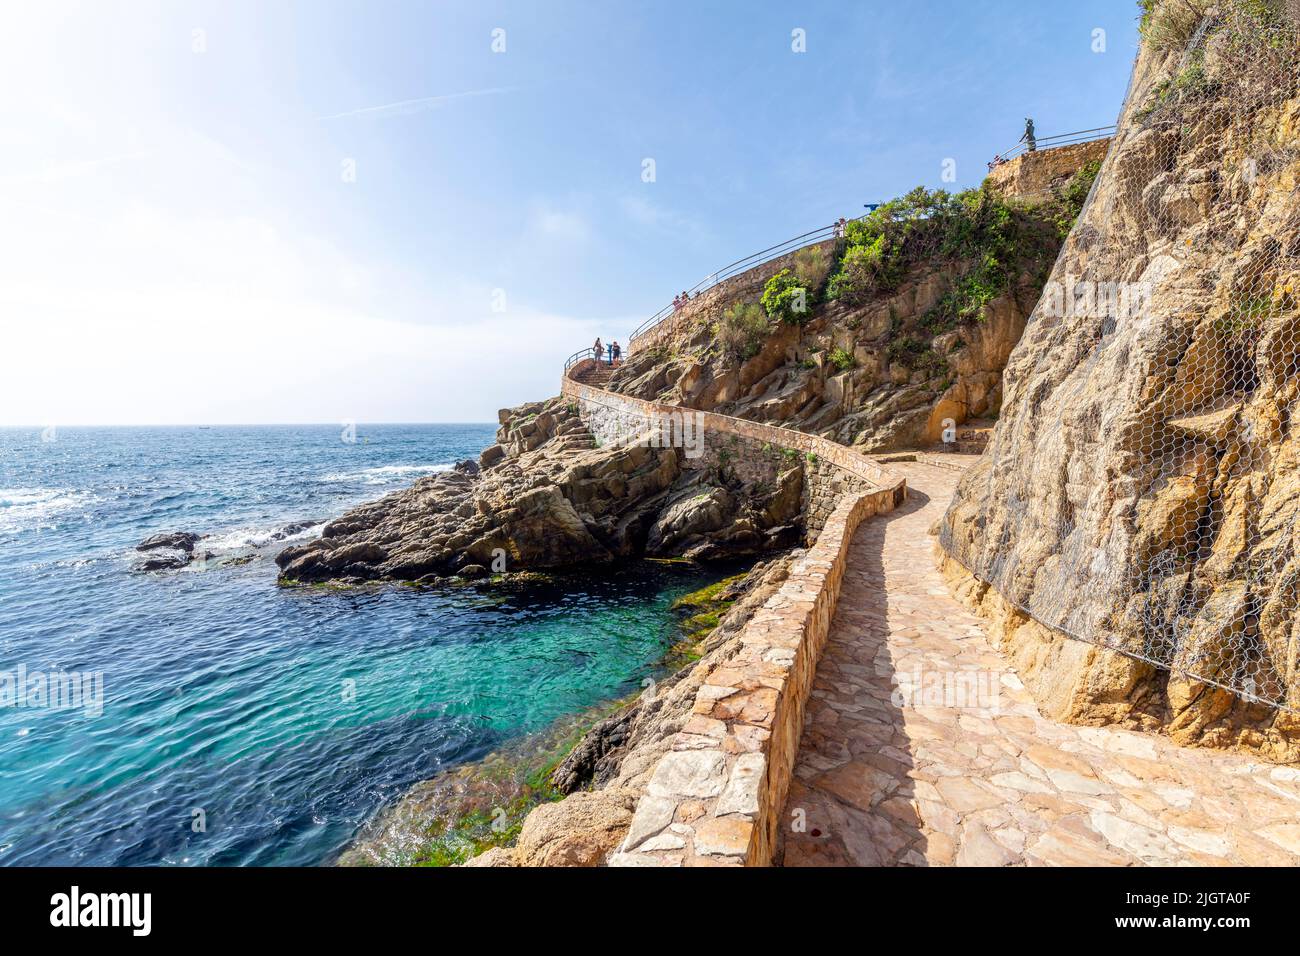 The hillside trail to the Jardins de Santa Clotilde on the Costa Brava coast of Lloret de Mar, Spain. Stock Photo